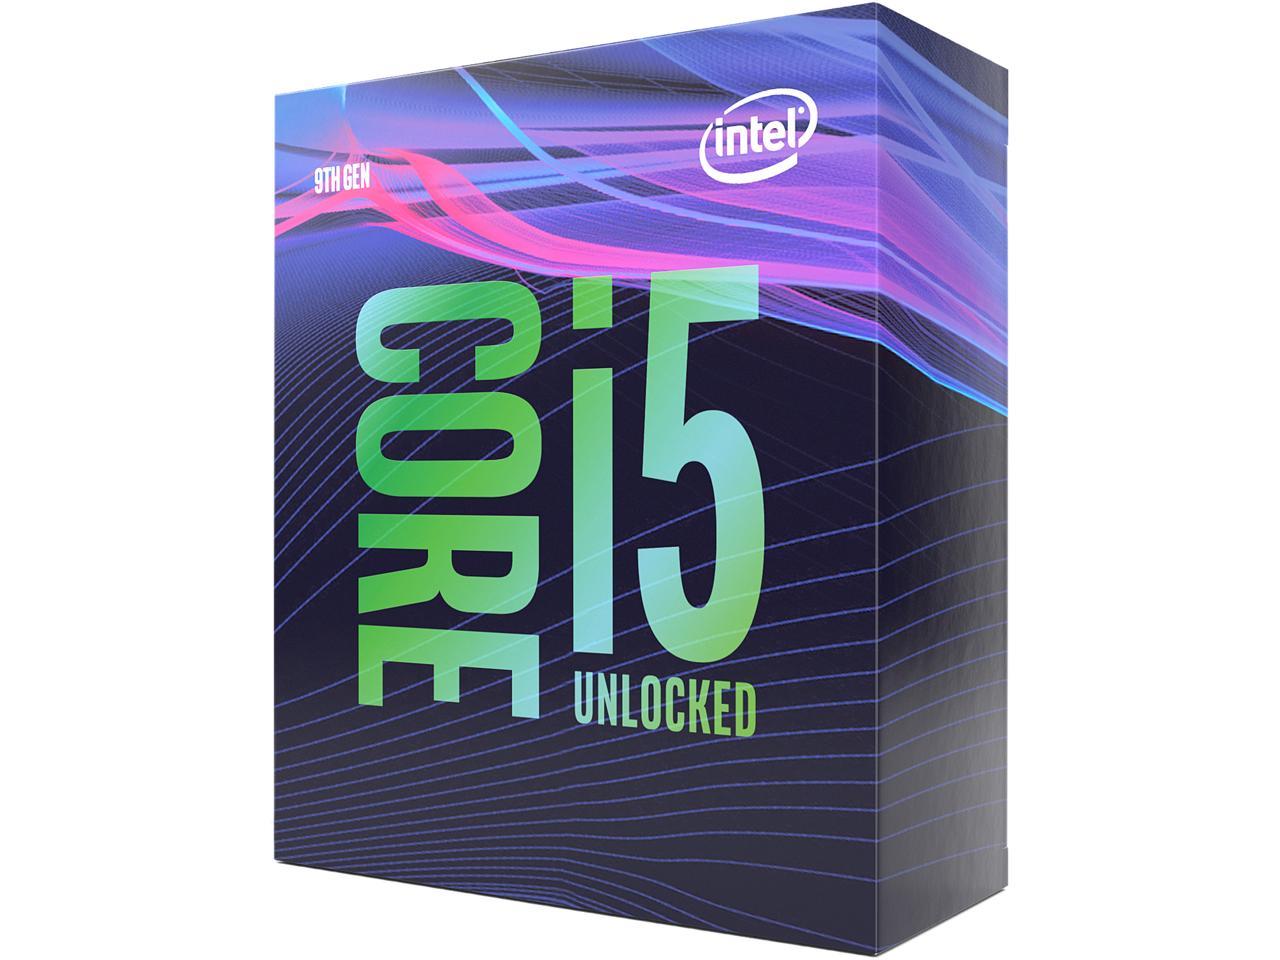 Intel 9th Generation Core i5-9600K CPU (Coffee Lake, 6/6 Cores/Threads, 3.7GHz Base, 4.6GHz Boost, Socket LGA 1151 (300 Series), 95W TDP Desktop Processor), Model BX80684I59600K